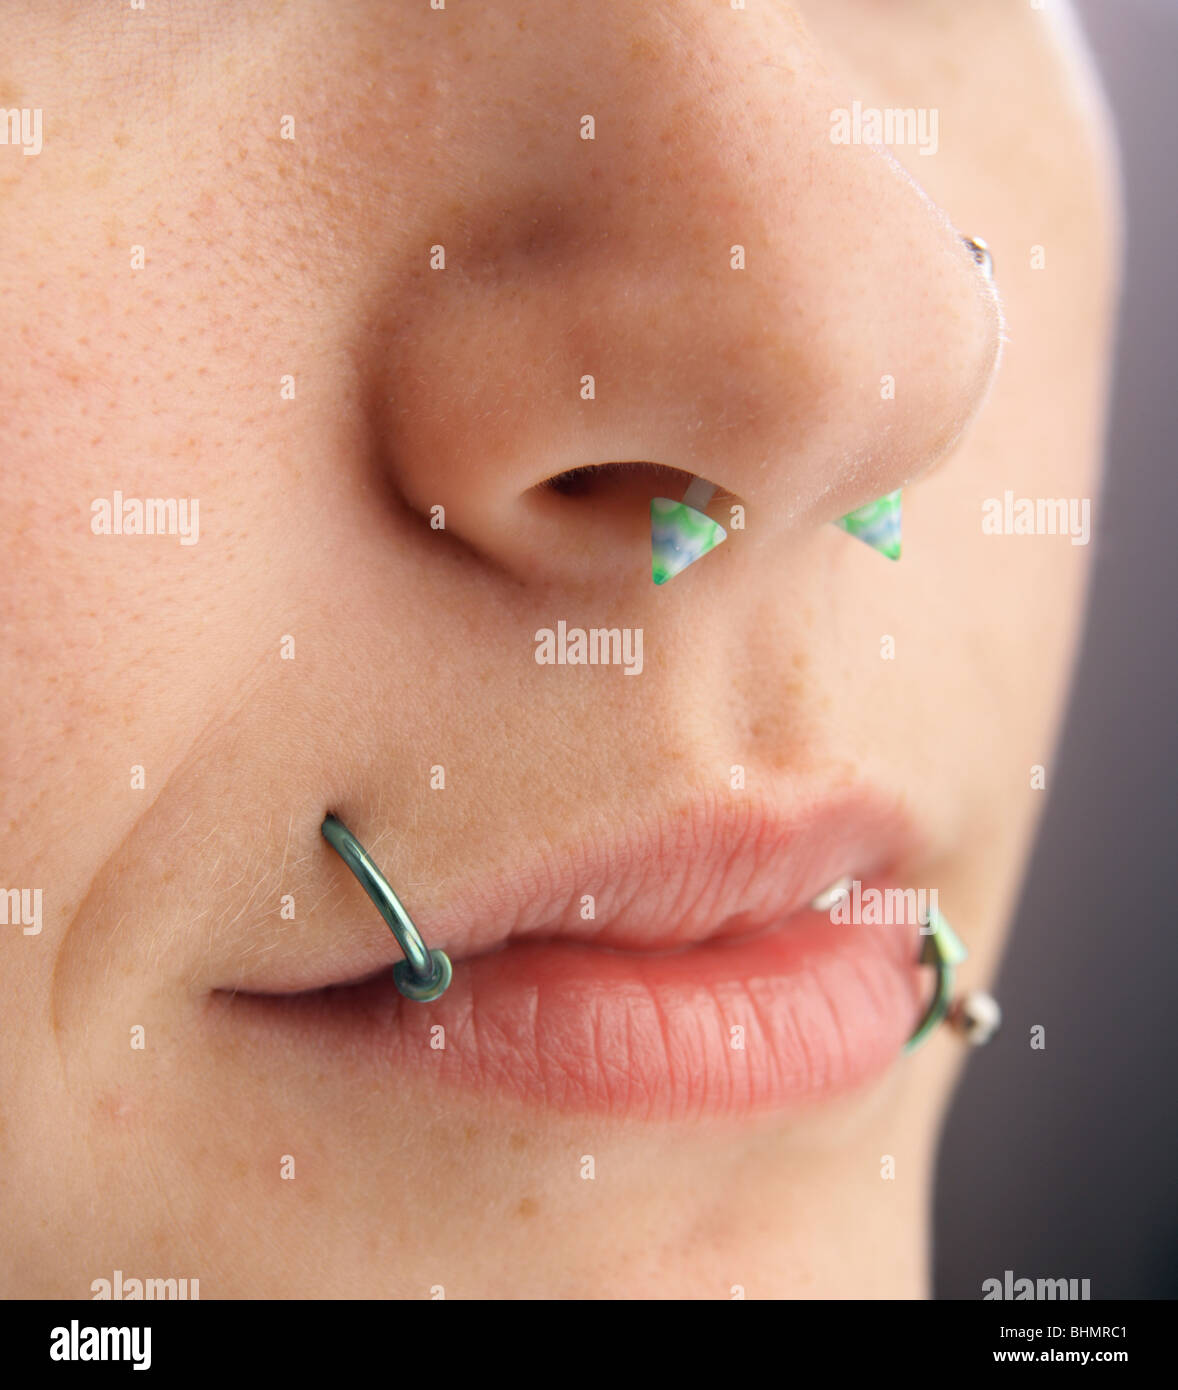 Nasenpiercings -Fotos und -Bildmaterial in hoher Auflösung – Alamy